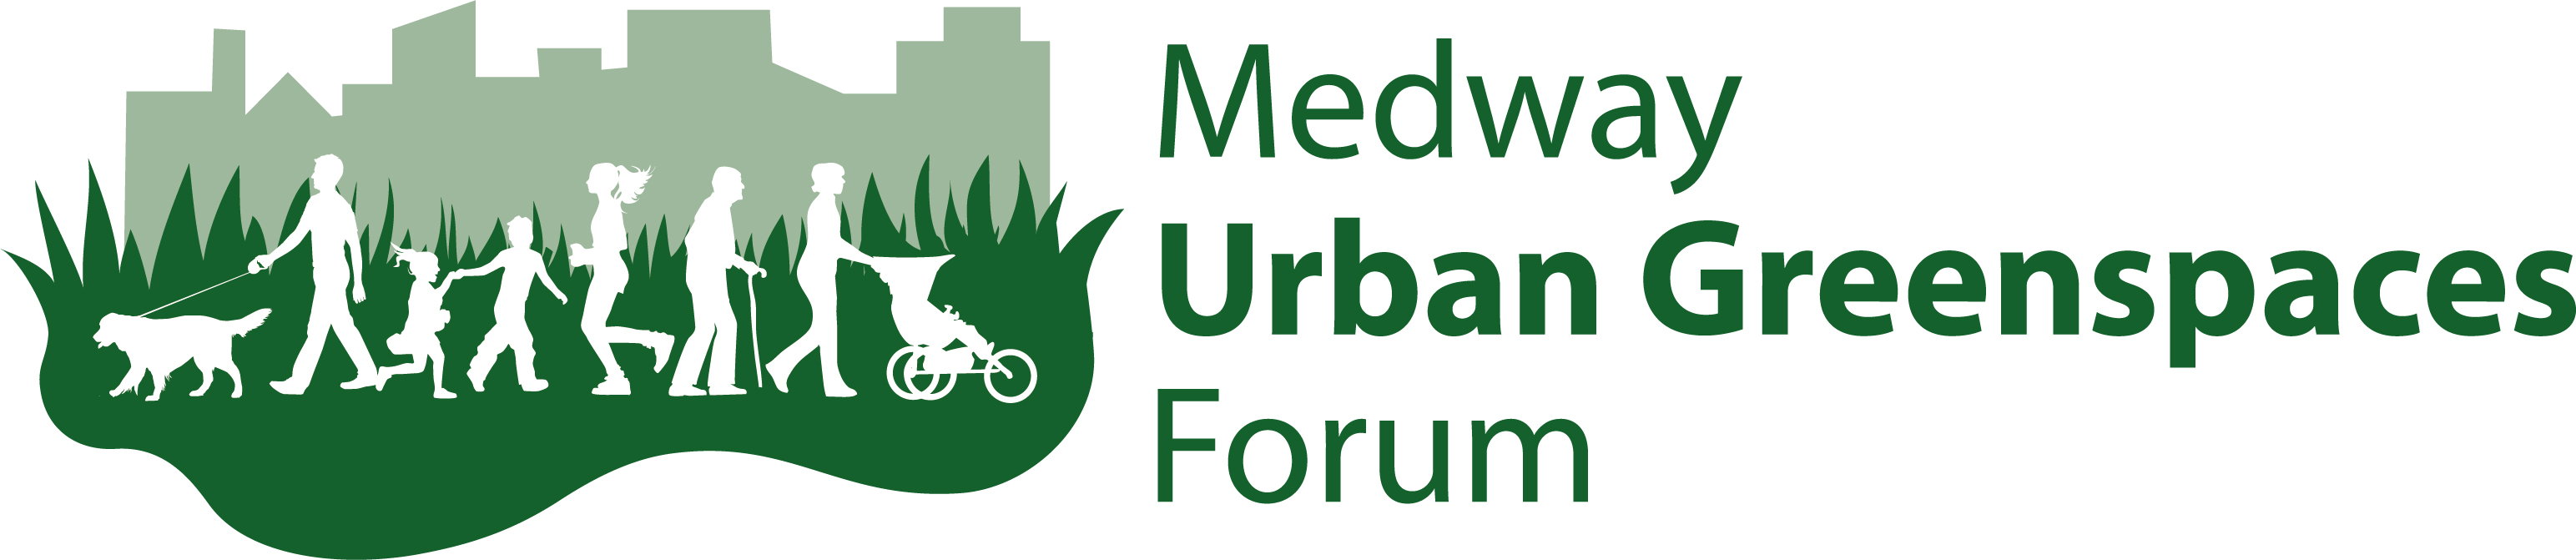 Medway Urban Greenspaces Forum